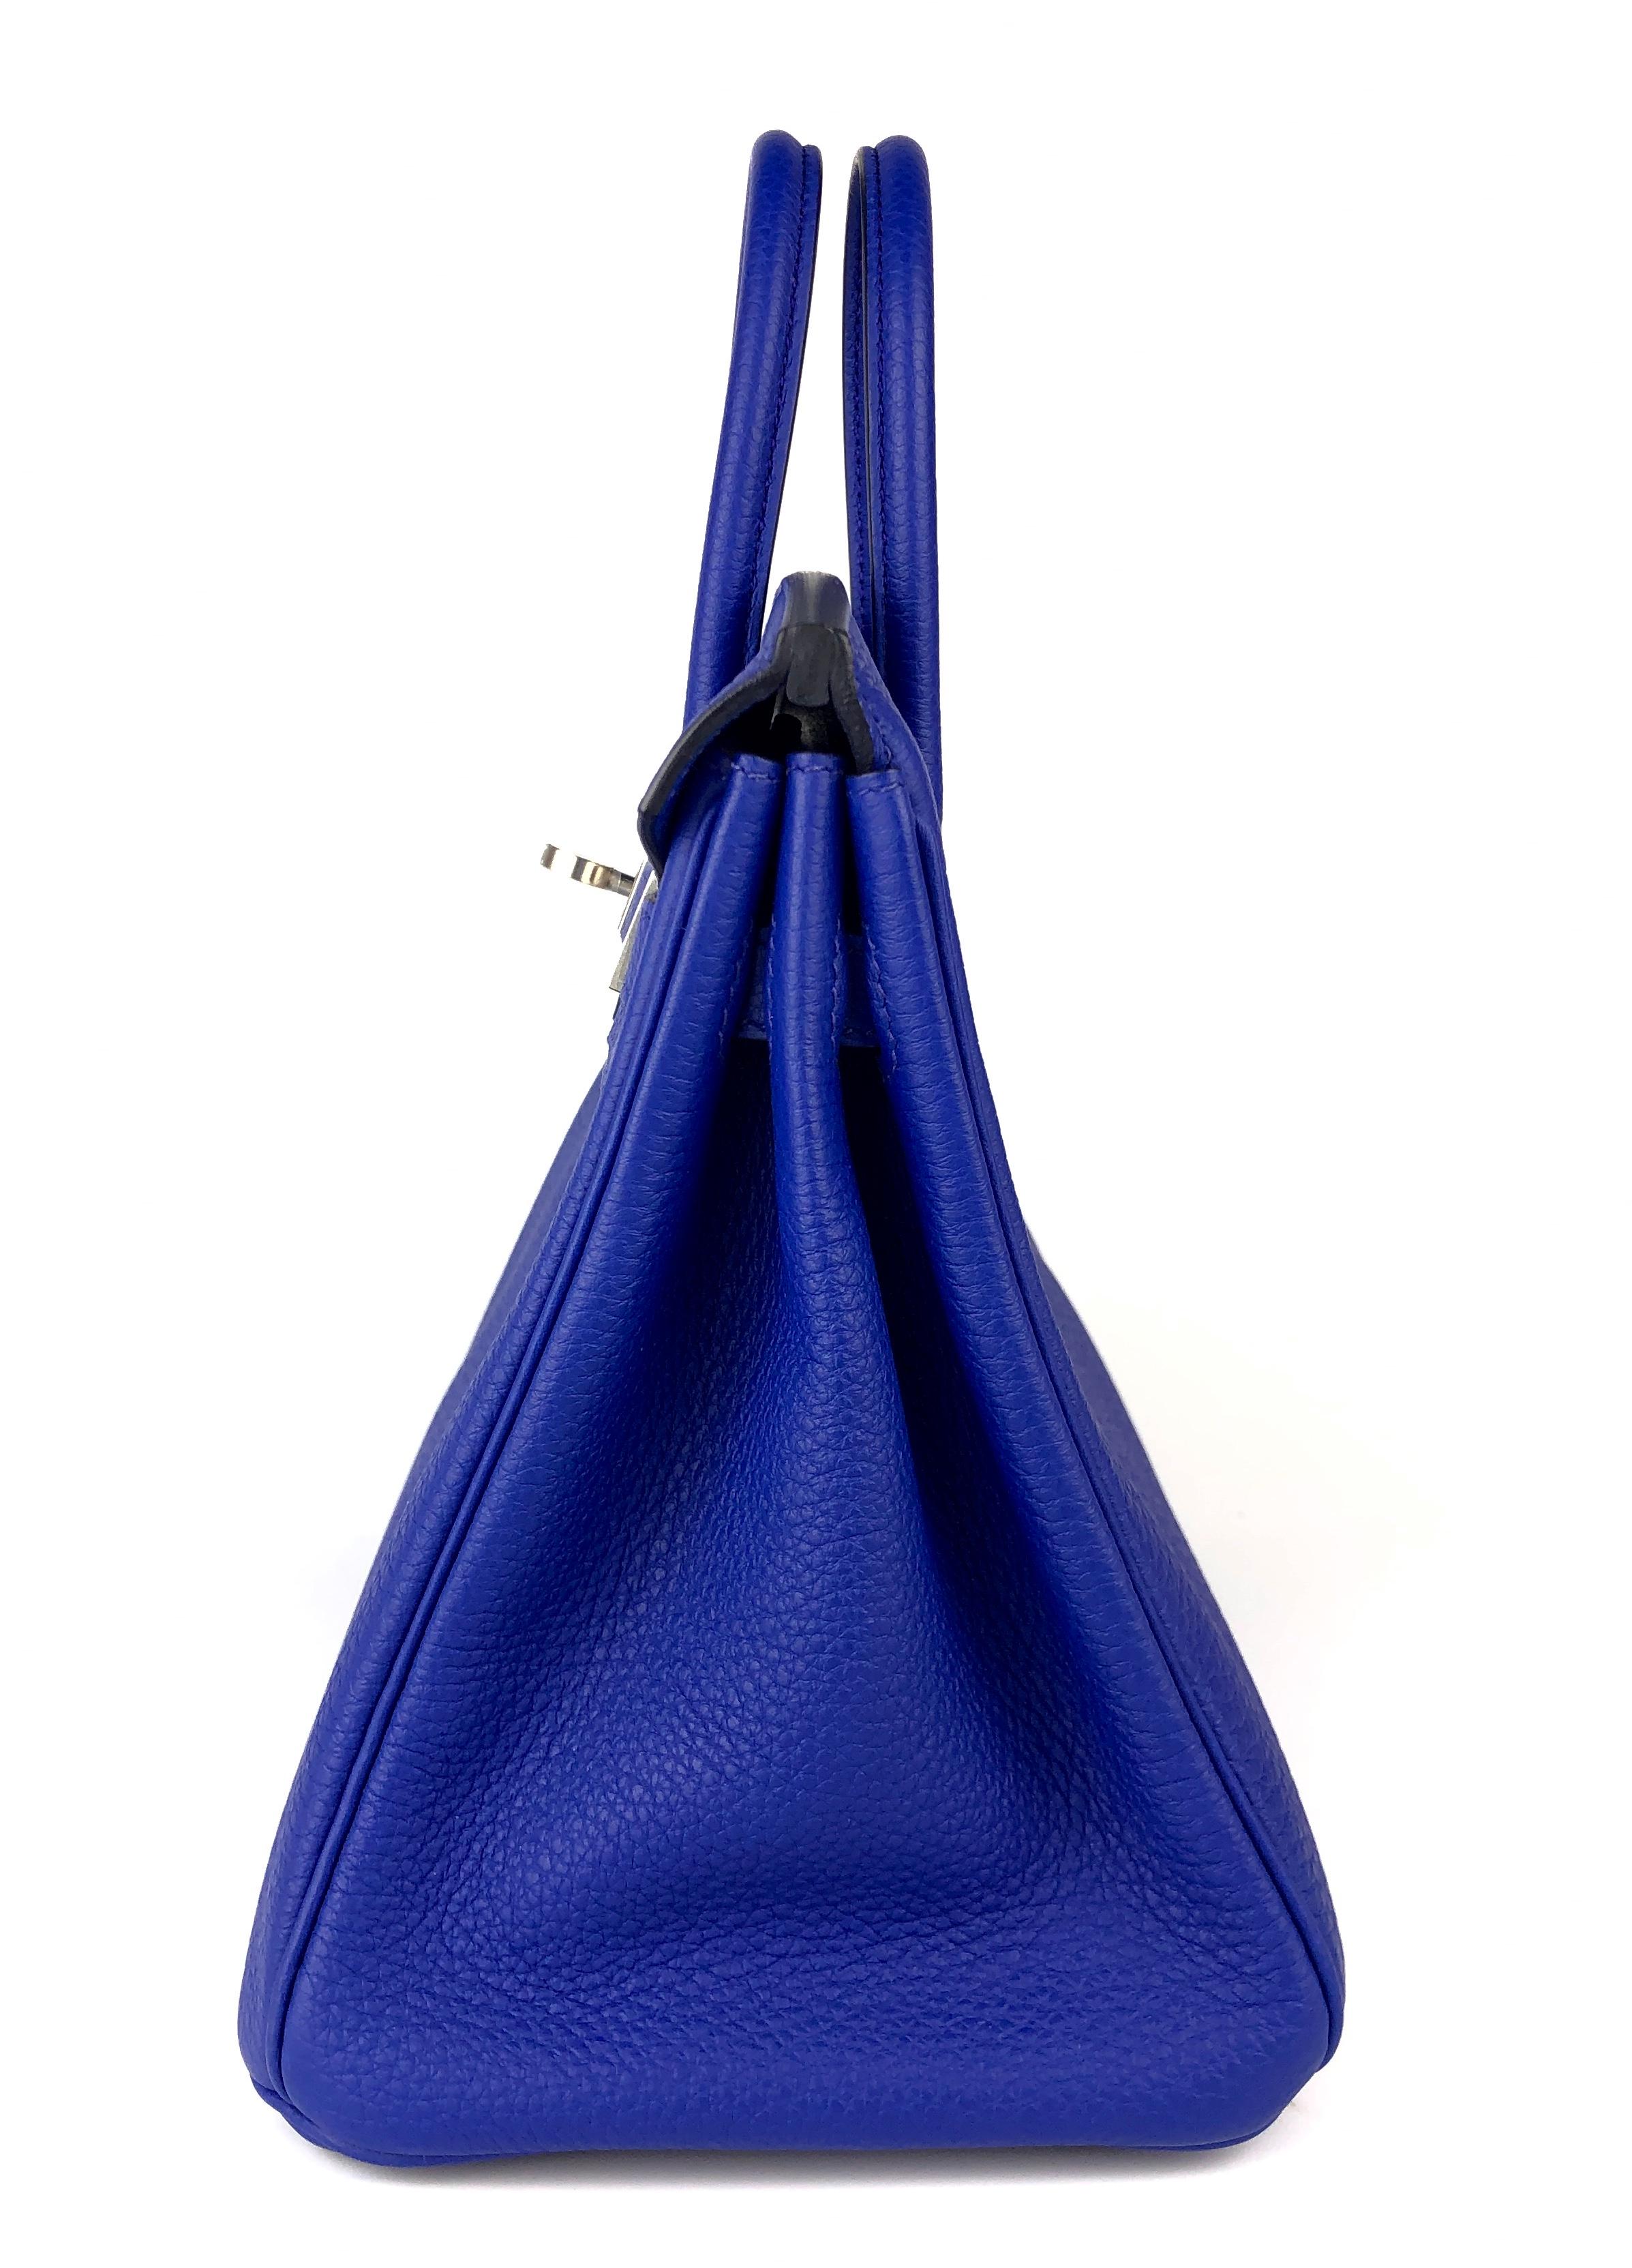 Hermes Birkin 25 Blue Bleu Royal Togo Leather Handbag Palladium Hardware NEW  4